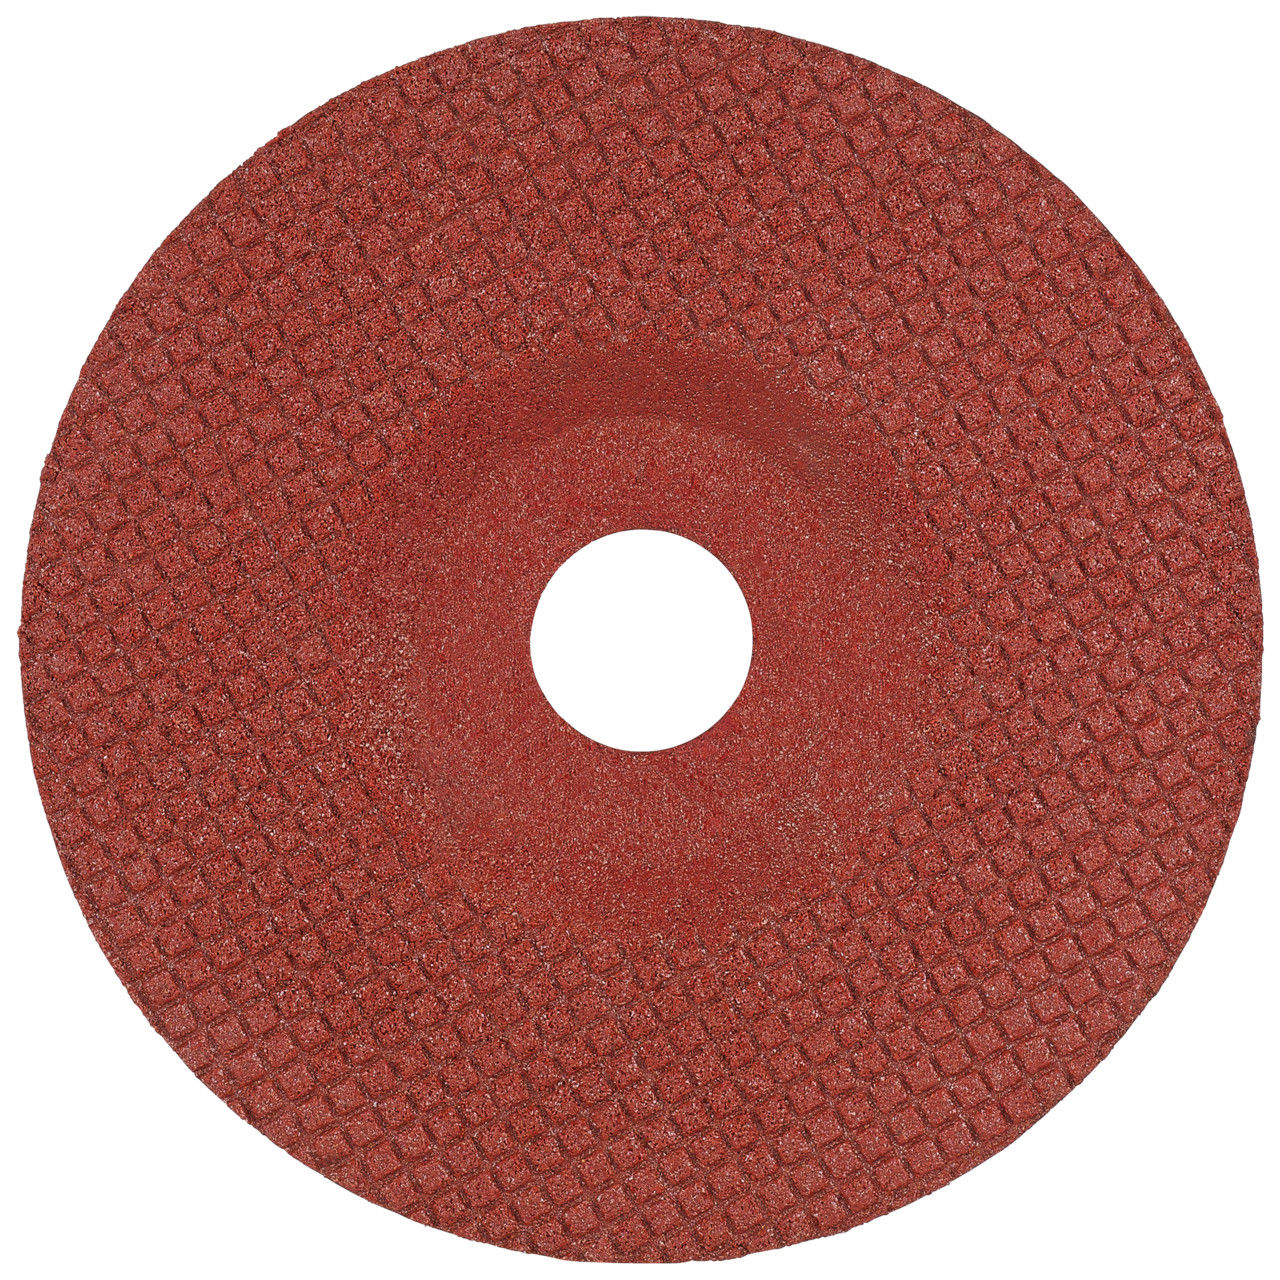 Disco TYROLIT DxH 115x22,23 TOUCH per acciaio inox e metalli non ferrosi, forma: 29T - versione offset, Art. 236318